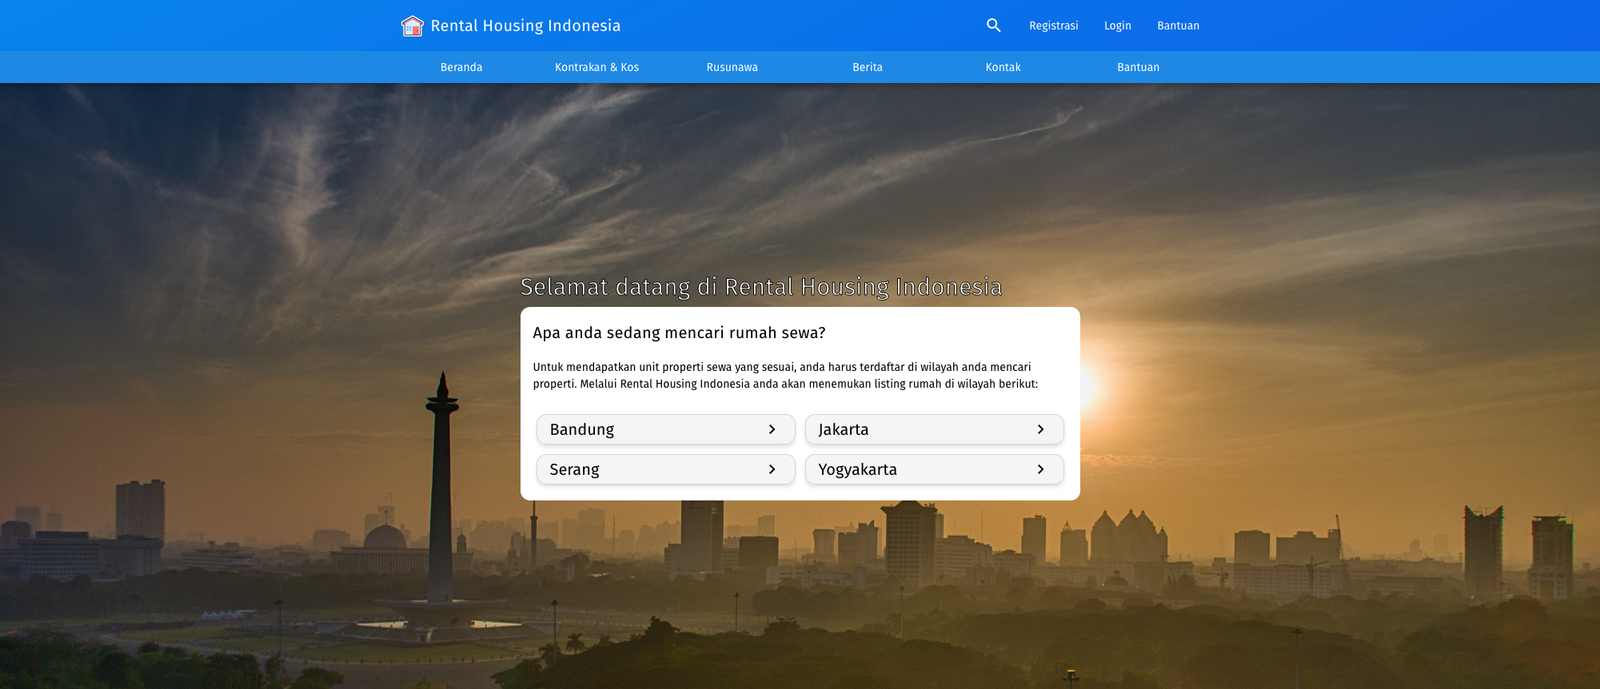 Rental Housing Website